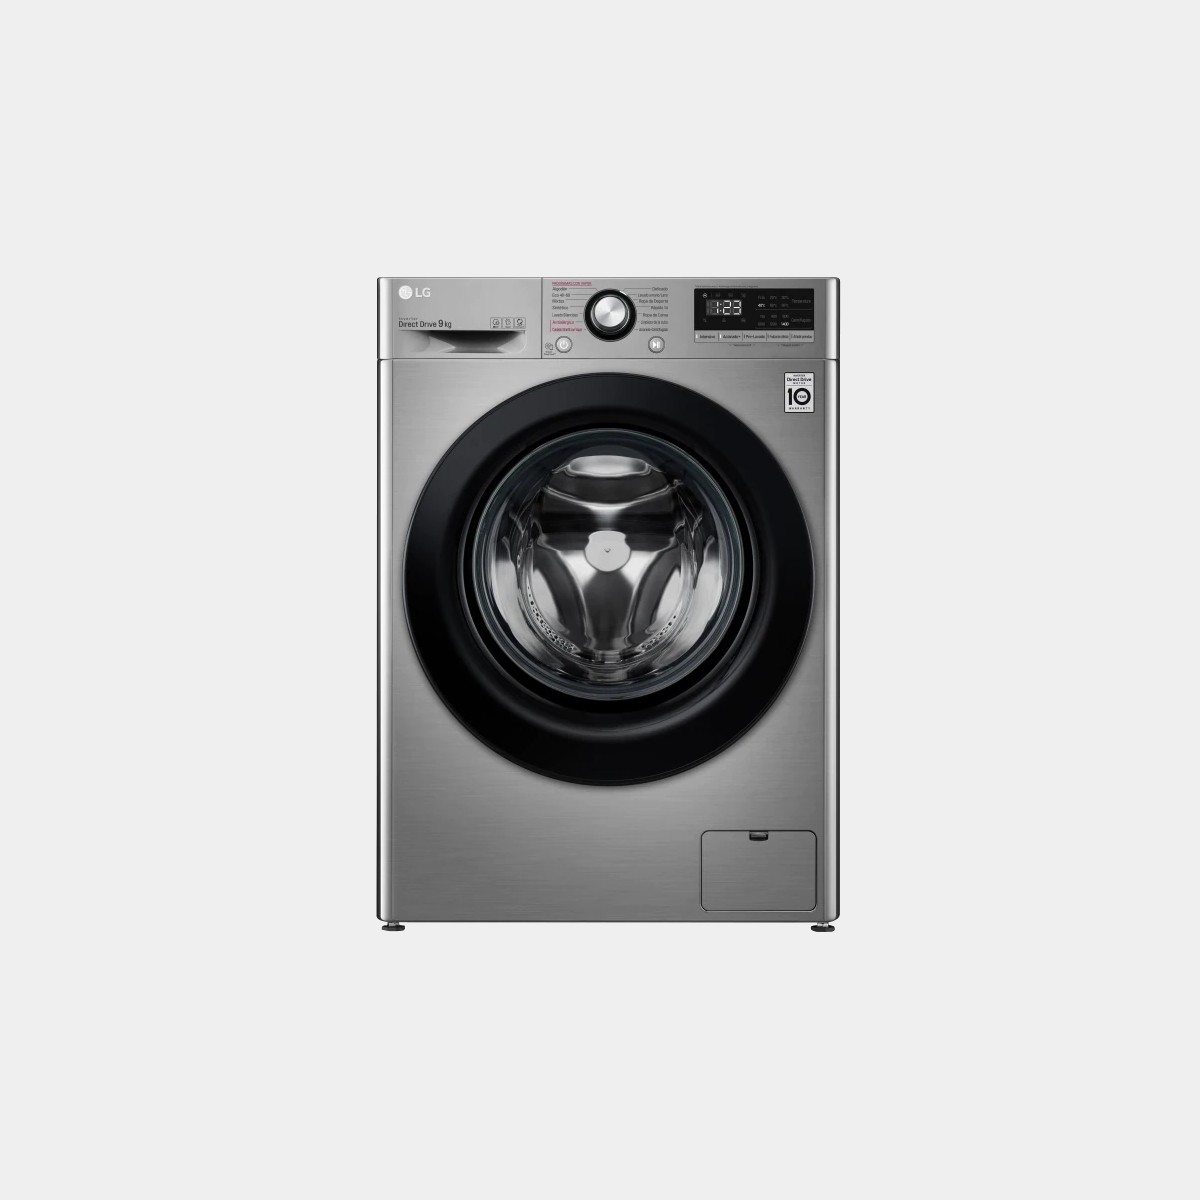 LG F4wv3009s6s lavadora inox de 9kg 1400rpm B